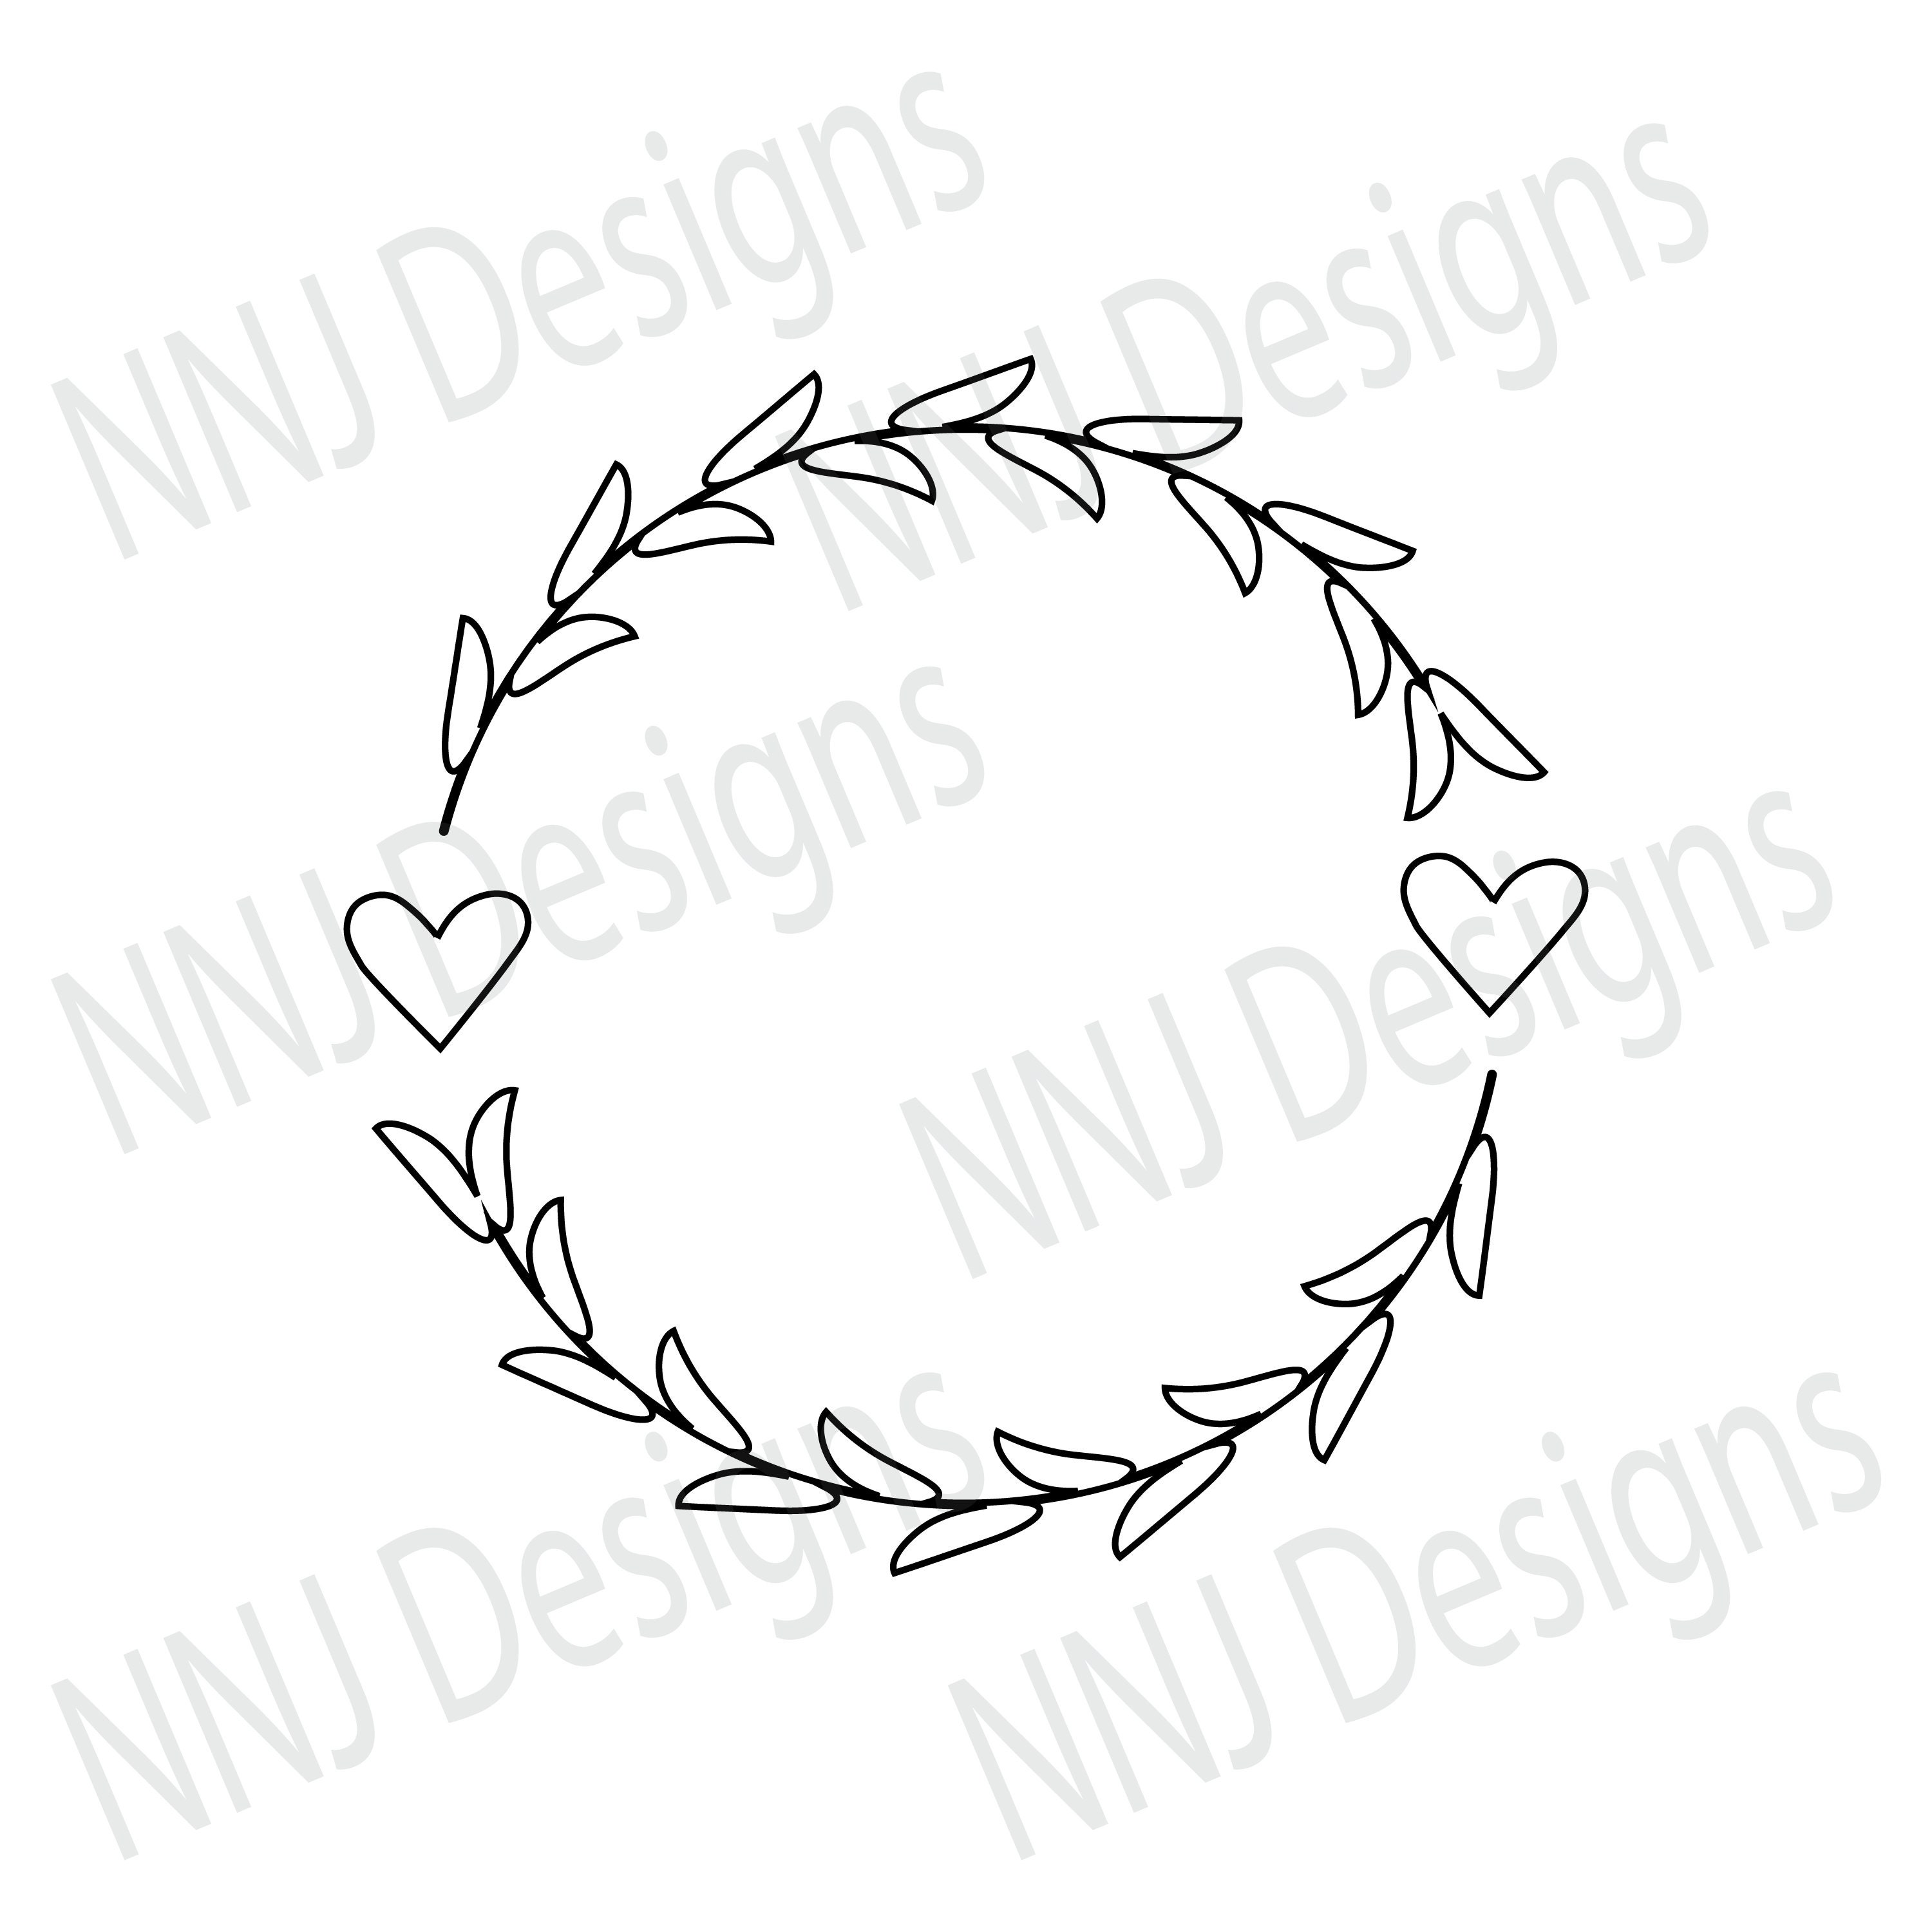 Circle Arrow Heart Wreath Frame Graphic by NNJ Designs · Creative